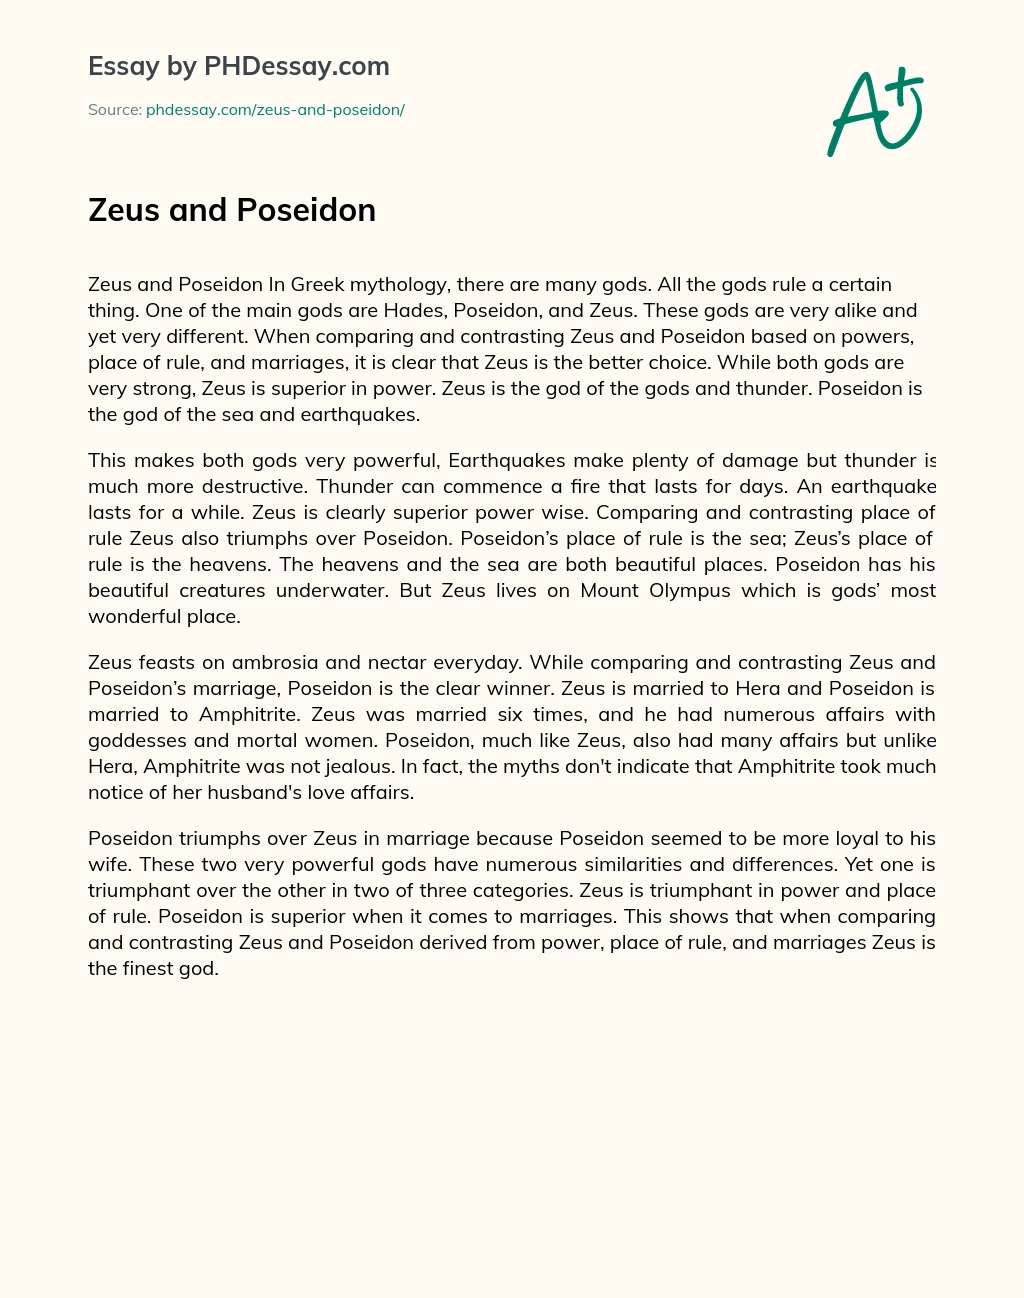 Zeus and Poseidon essay